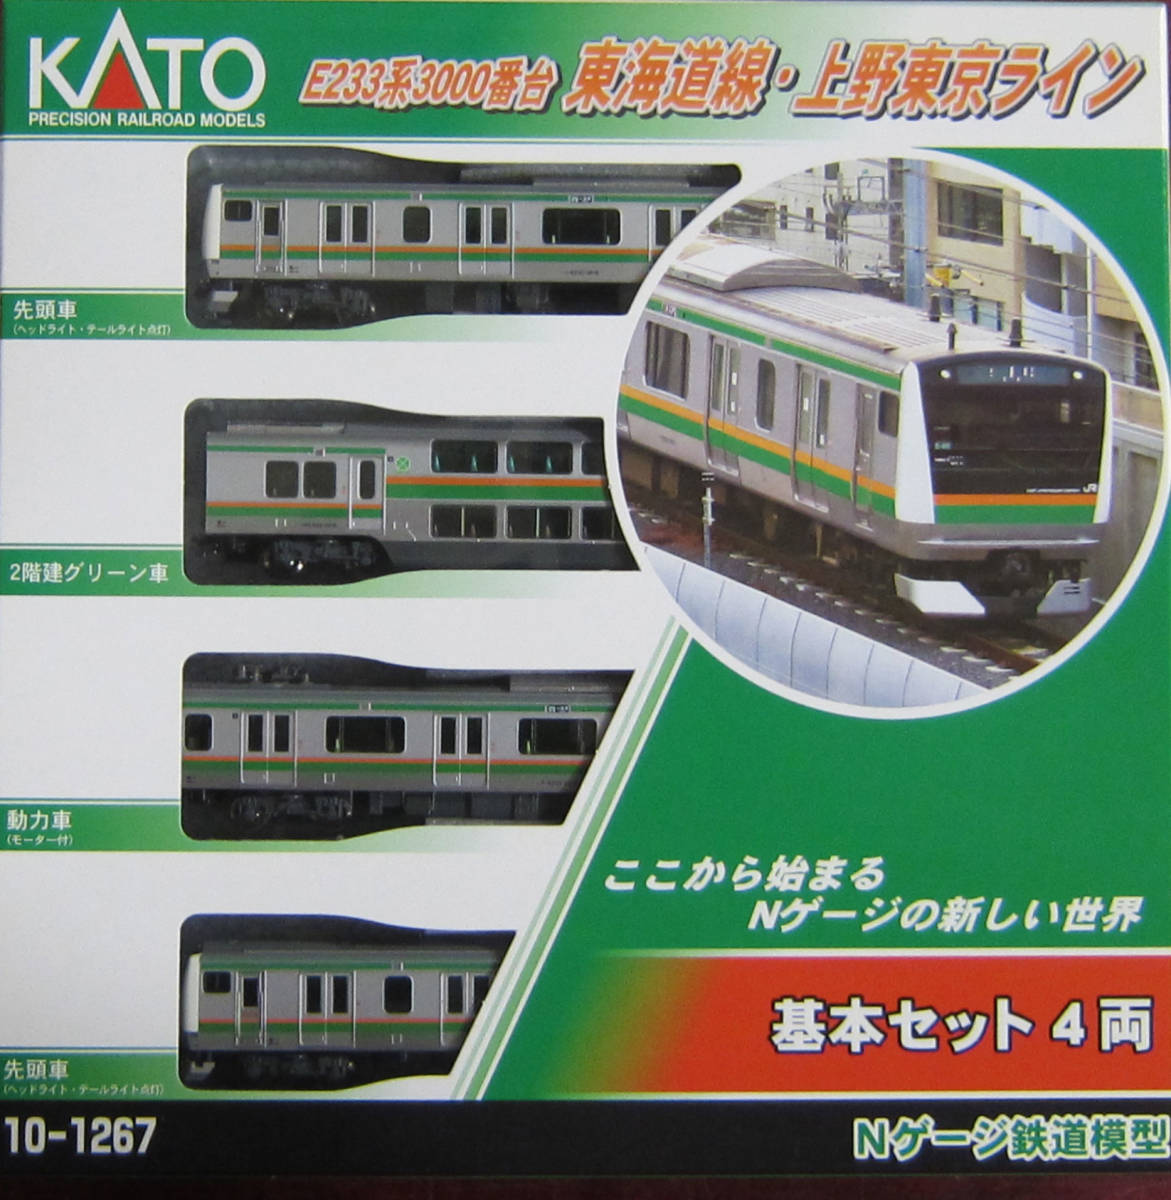 KATO・10-1267・E233系3000番台東海道線・上野東京ライン基本セット(4